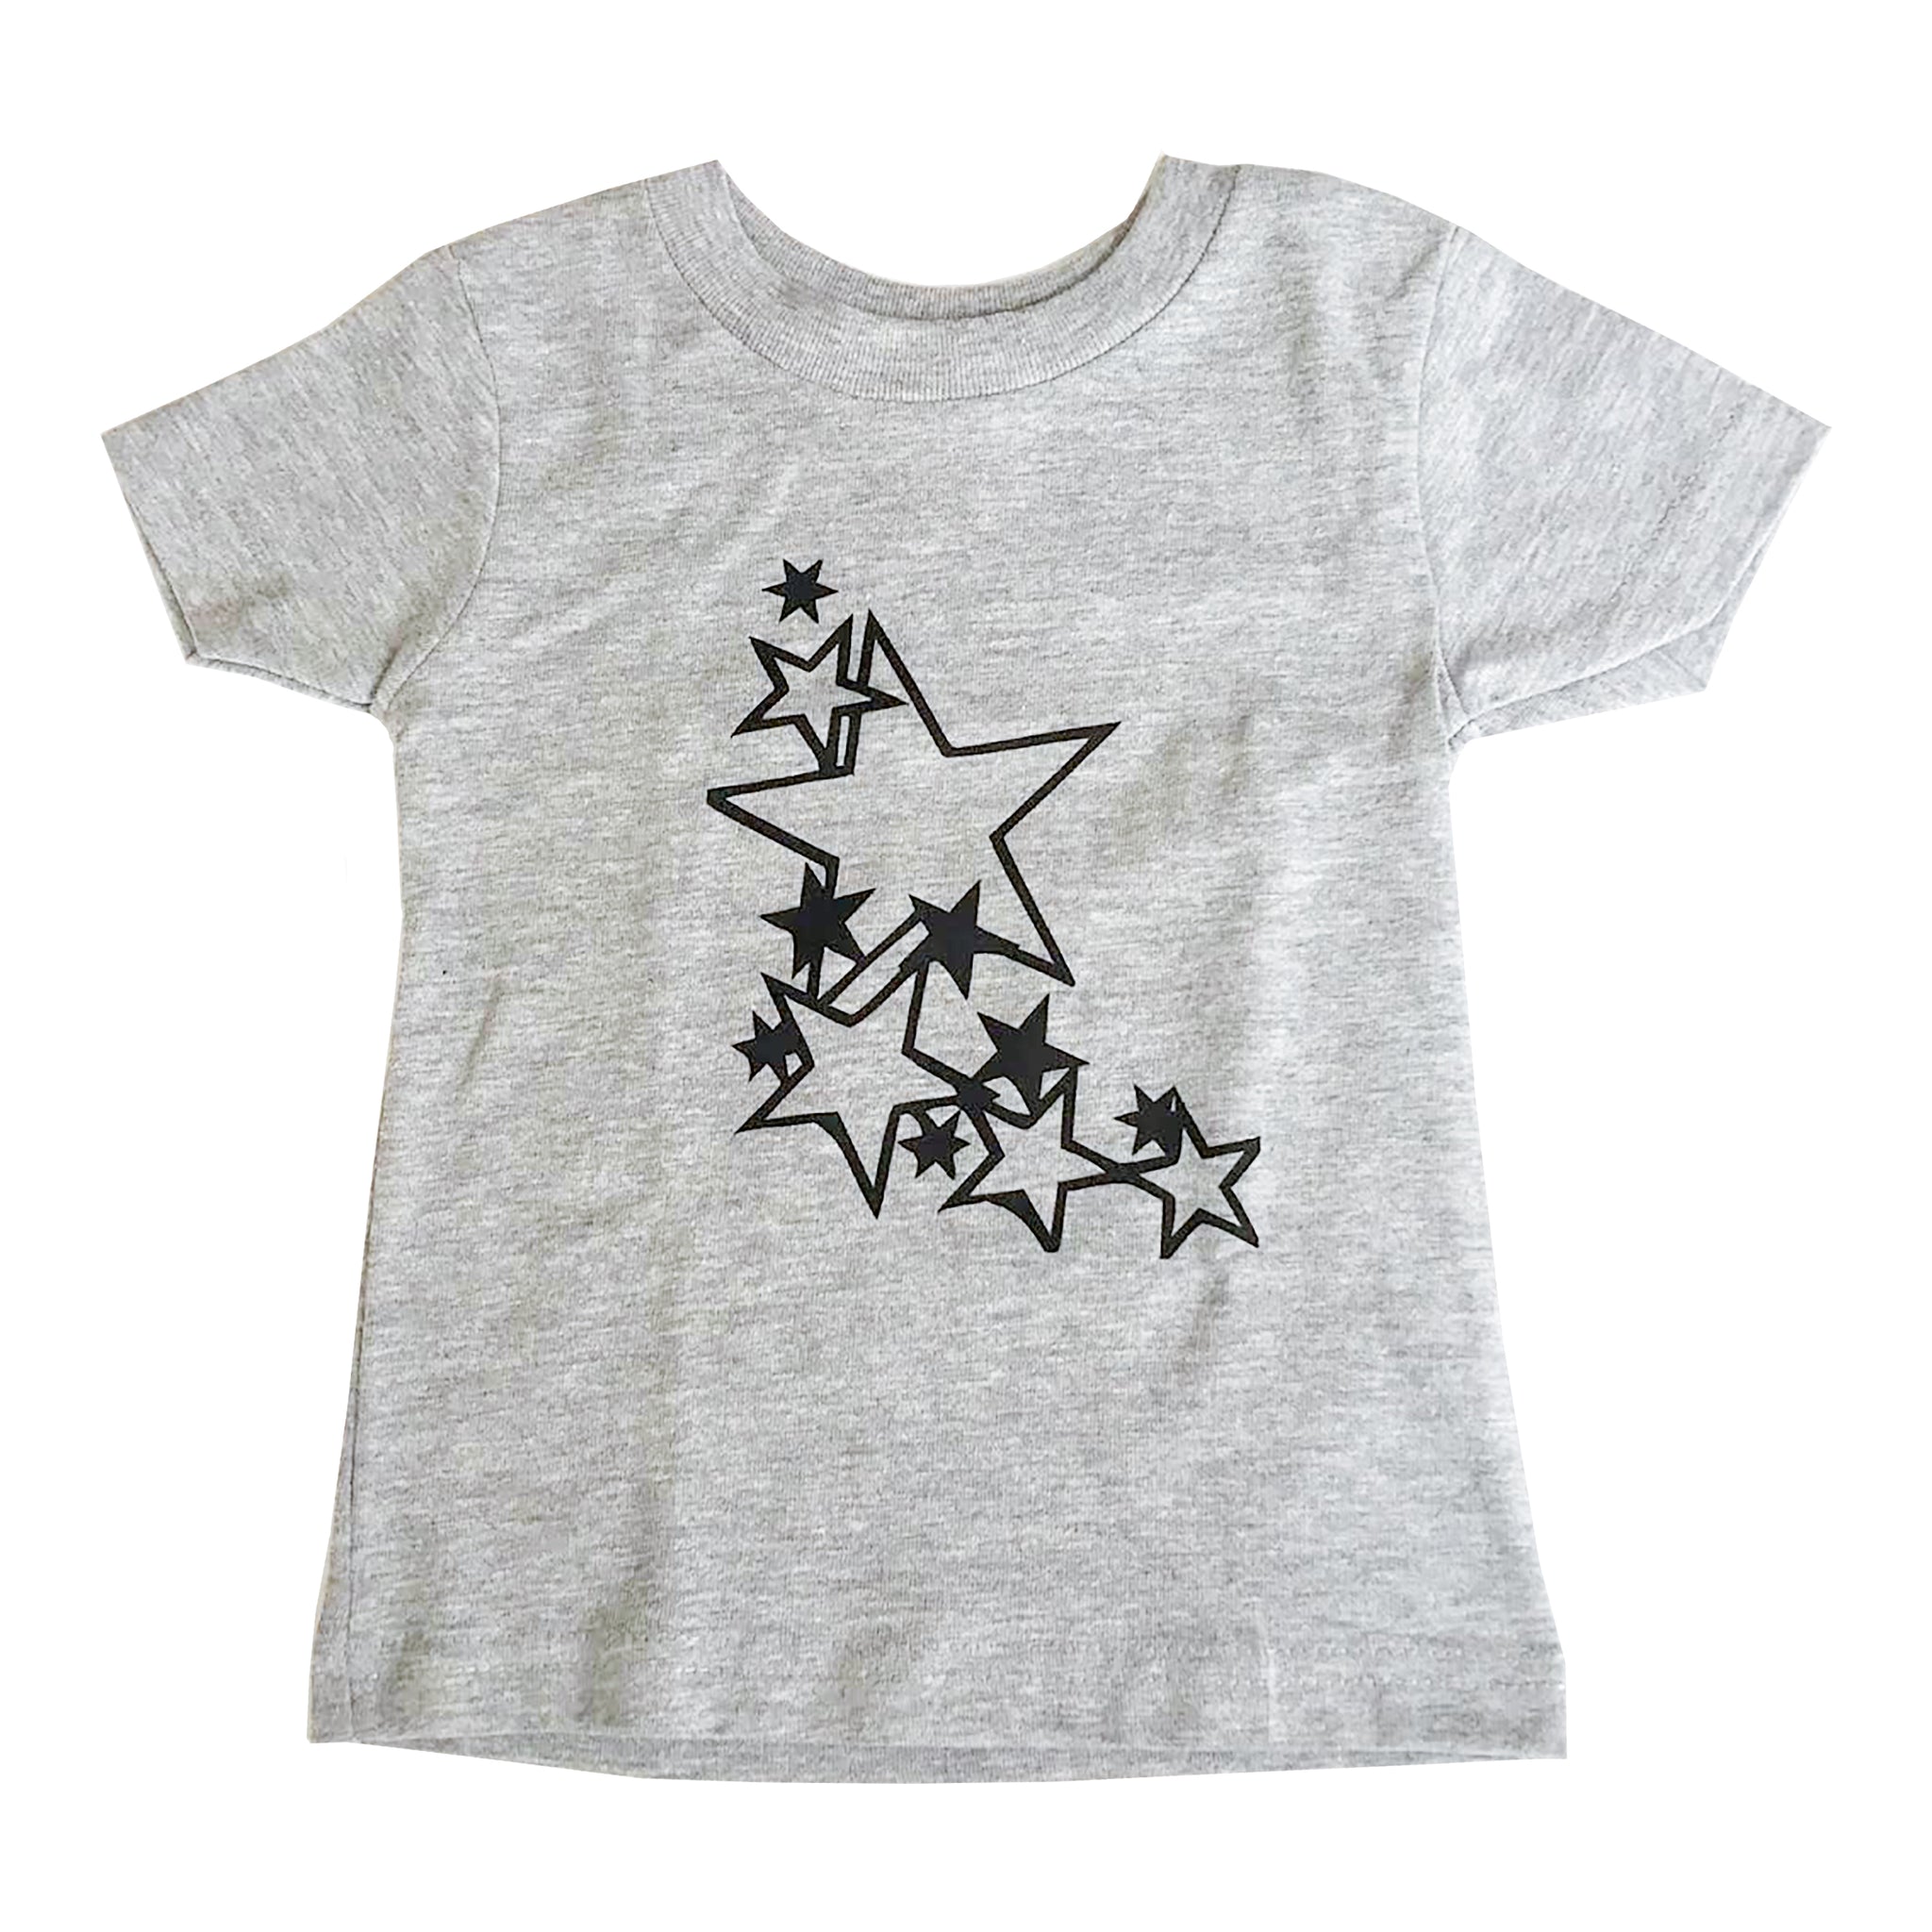 Falling stars Grey Kids T-shirt